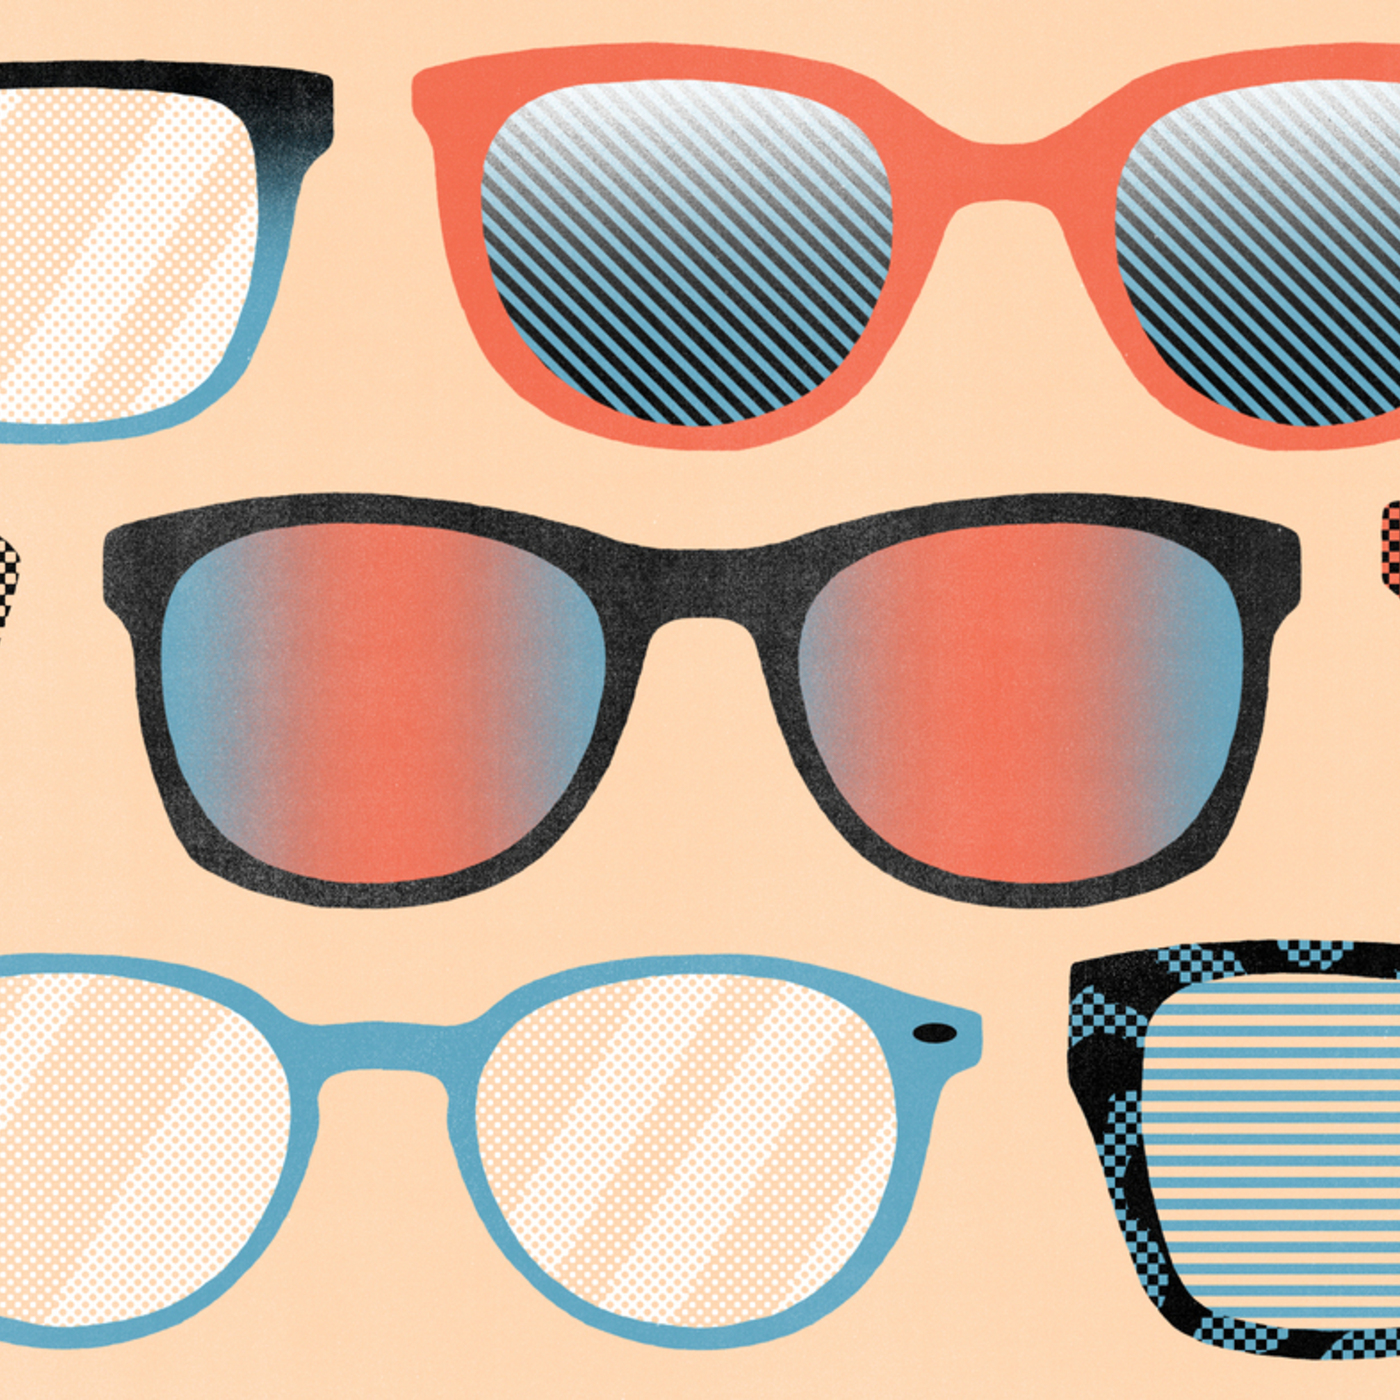 Warby Parker: Dave Gilboa & Neil Blumenthal